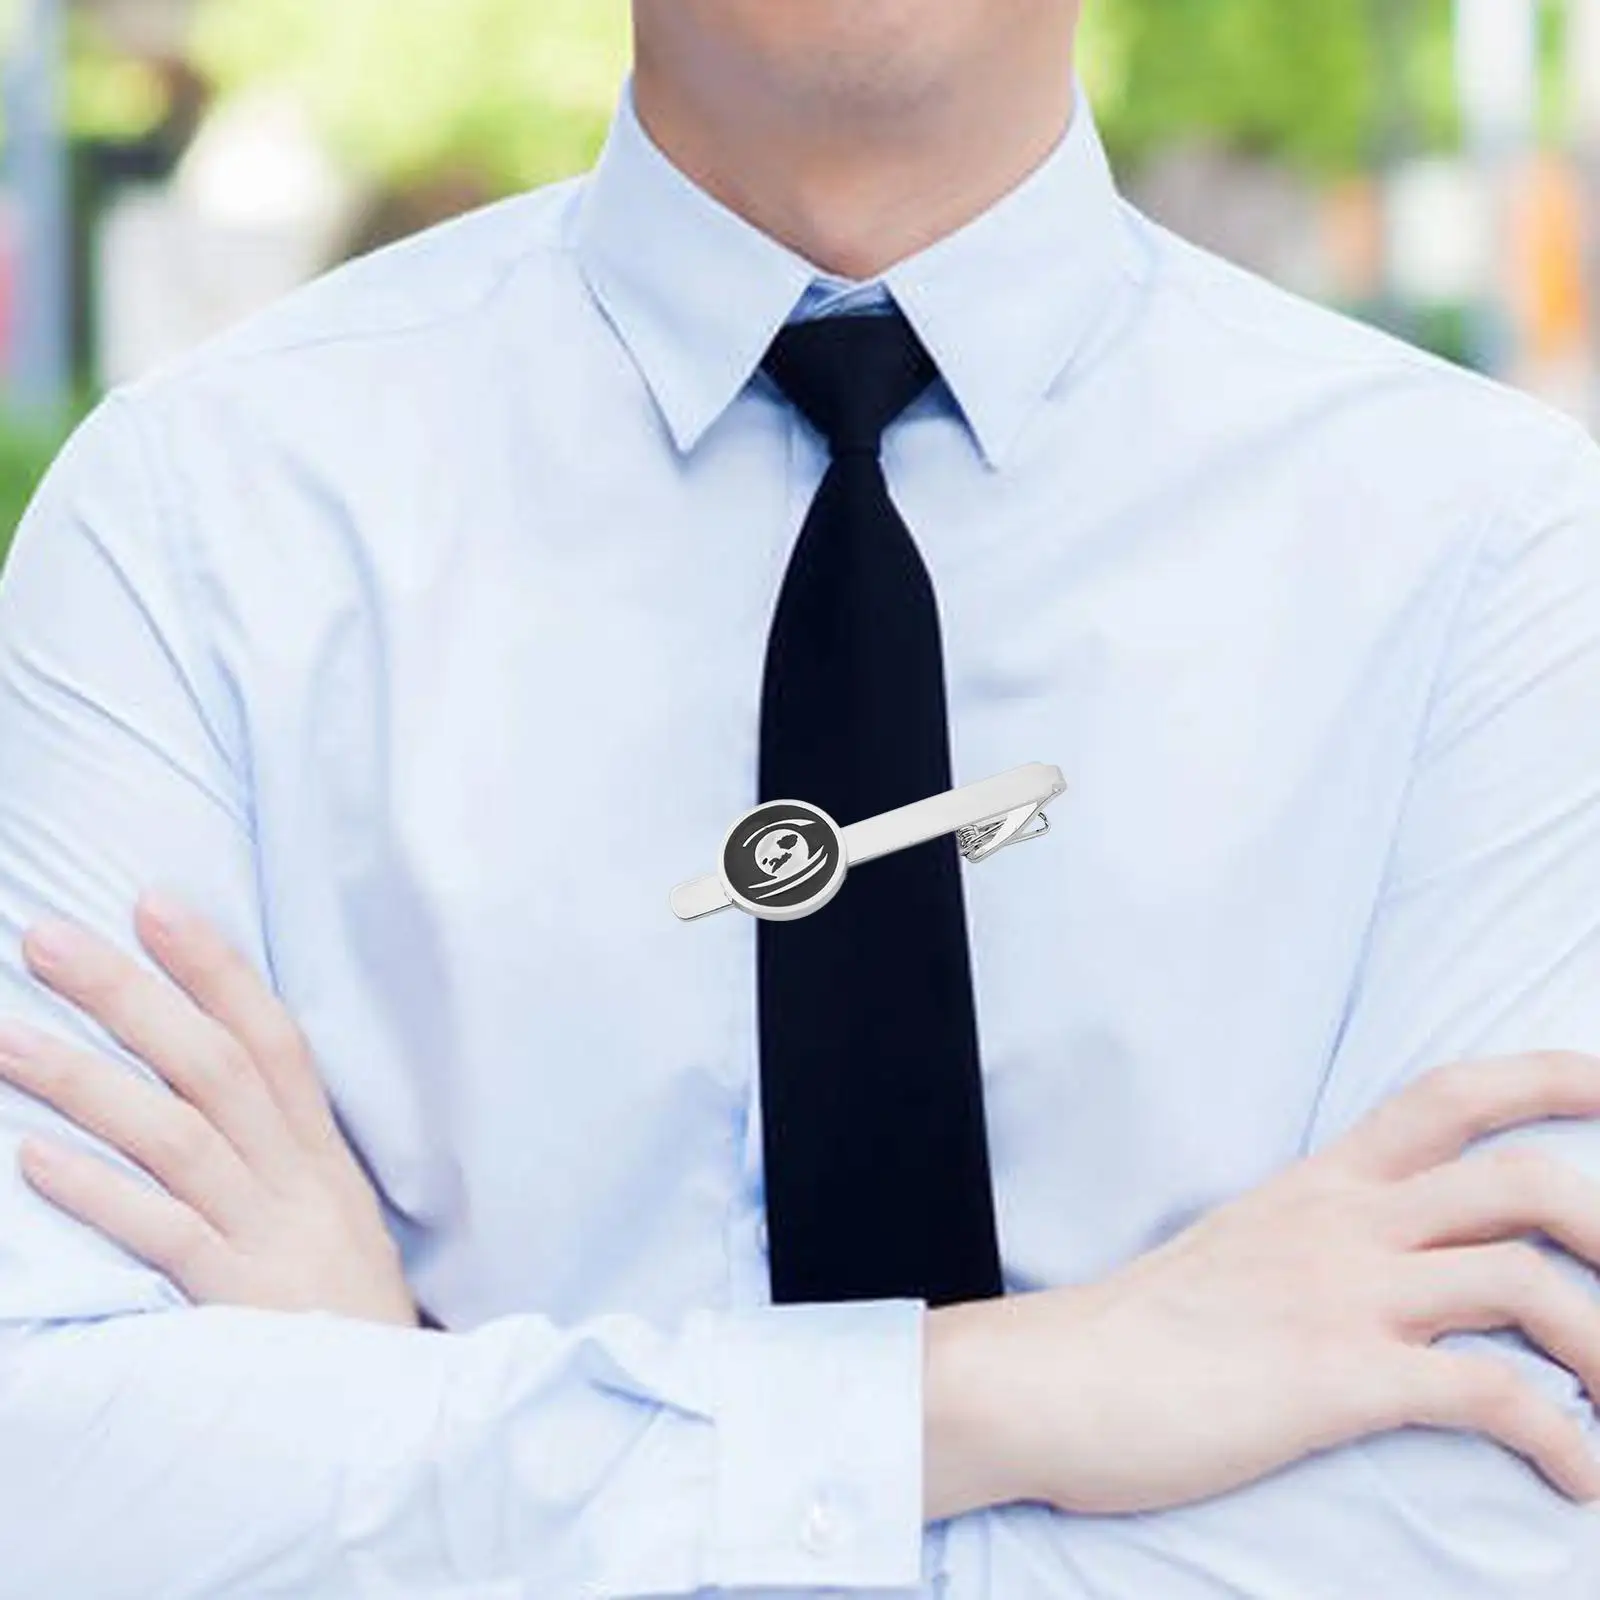 Tie Clip for Men Statement for Regular Ties Formal Stylish Tie Bar Pinch for Shirt Accessories Wedding Groomsmen Dad